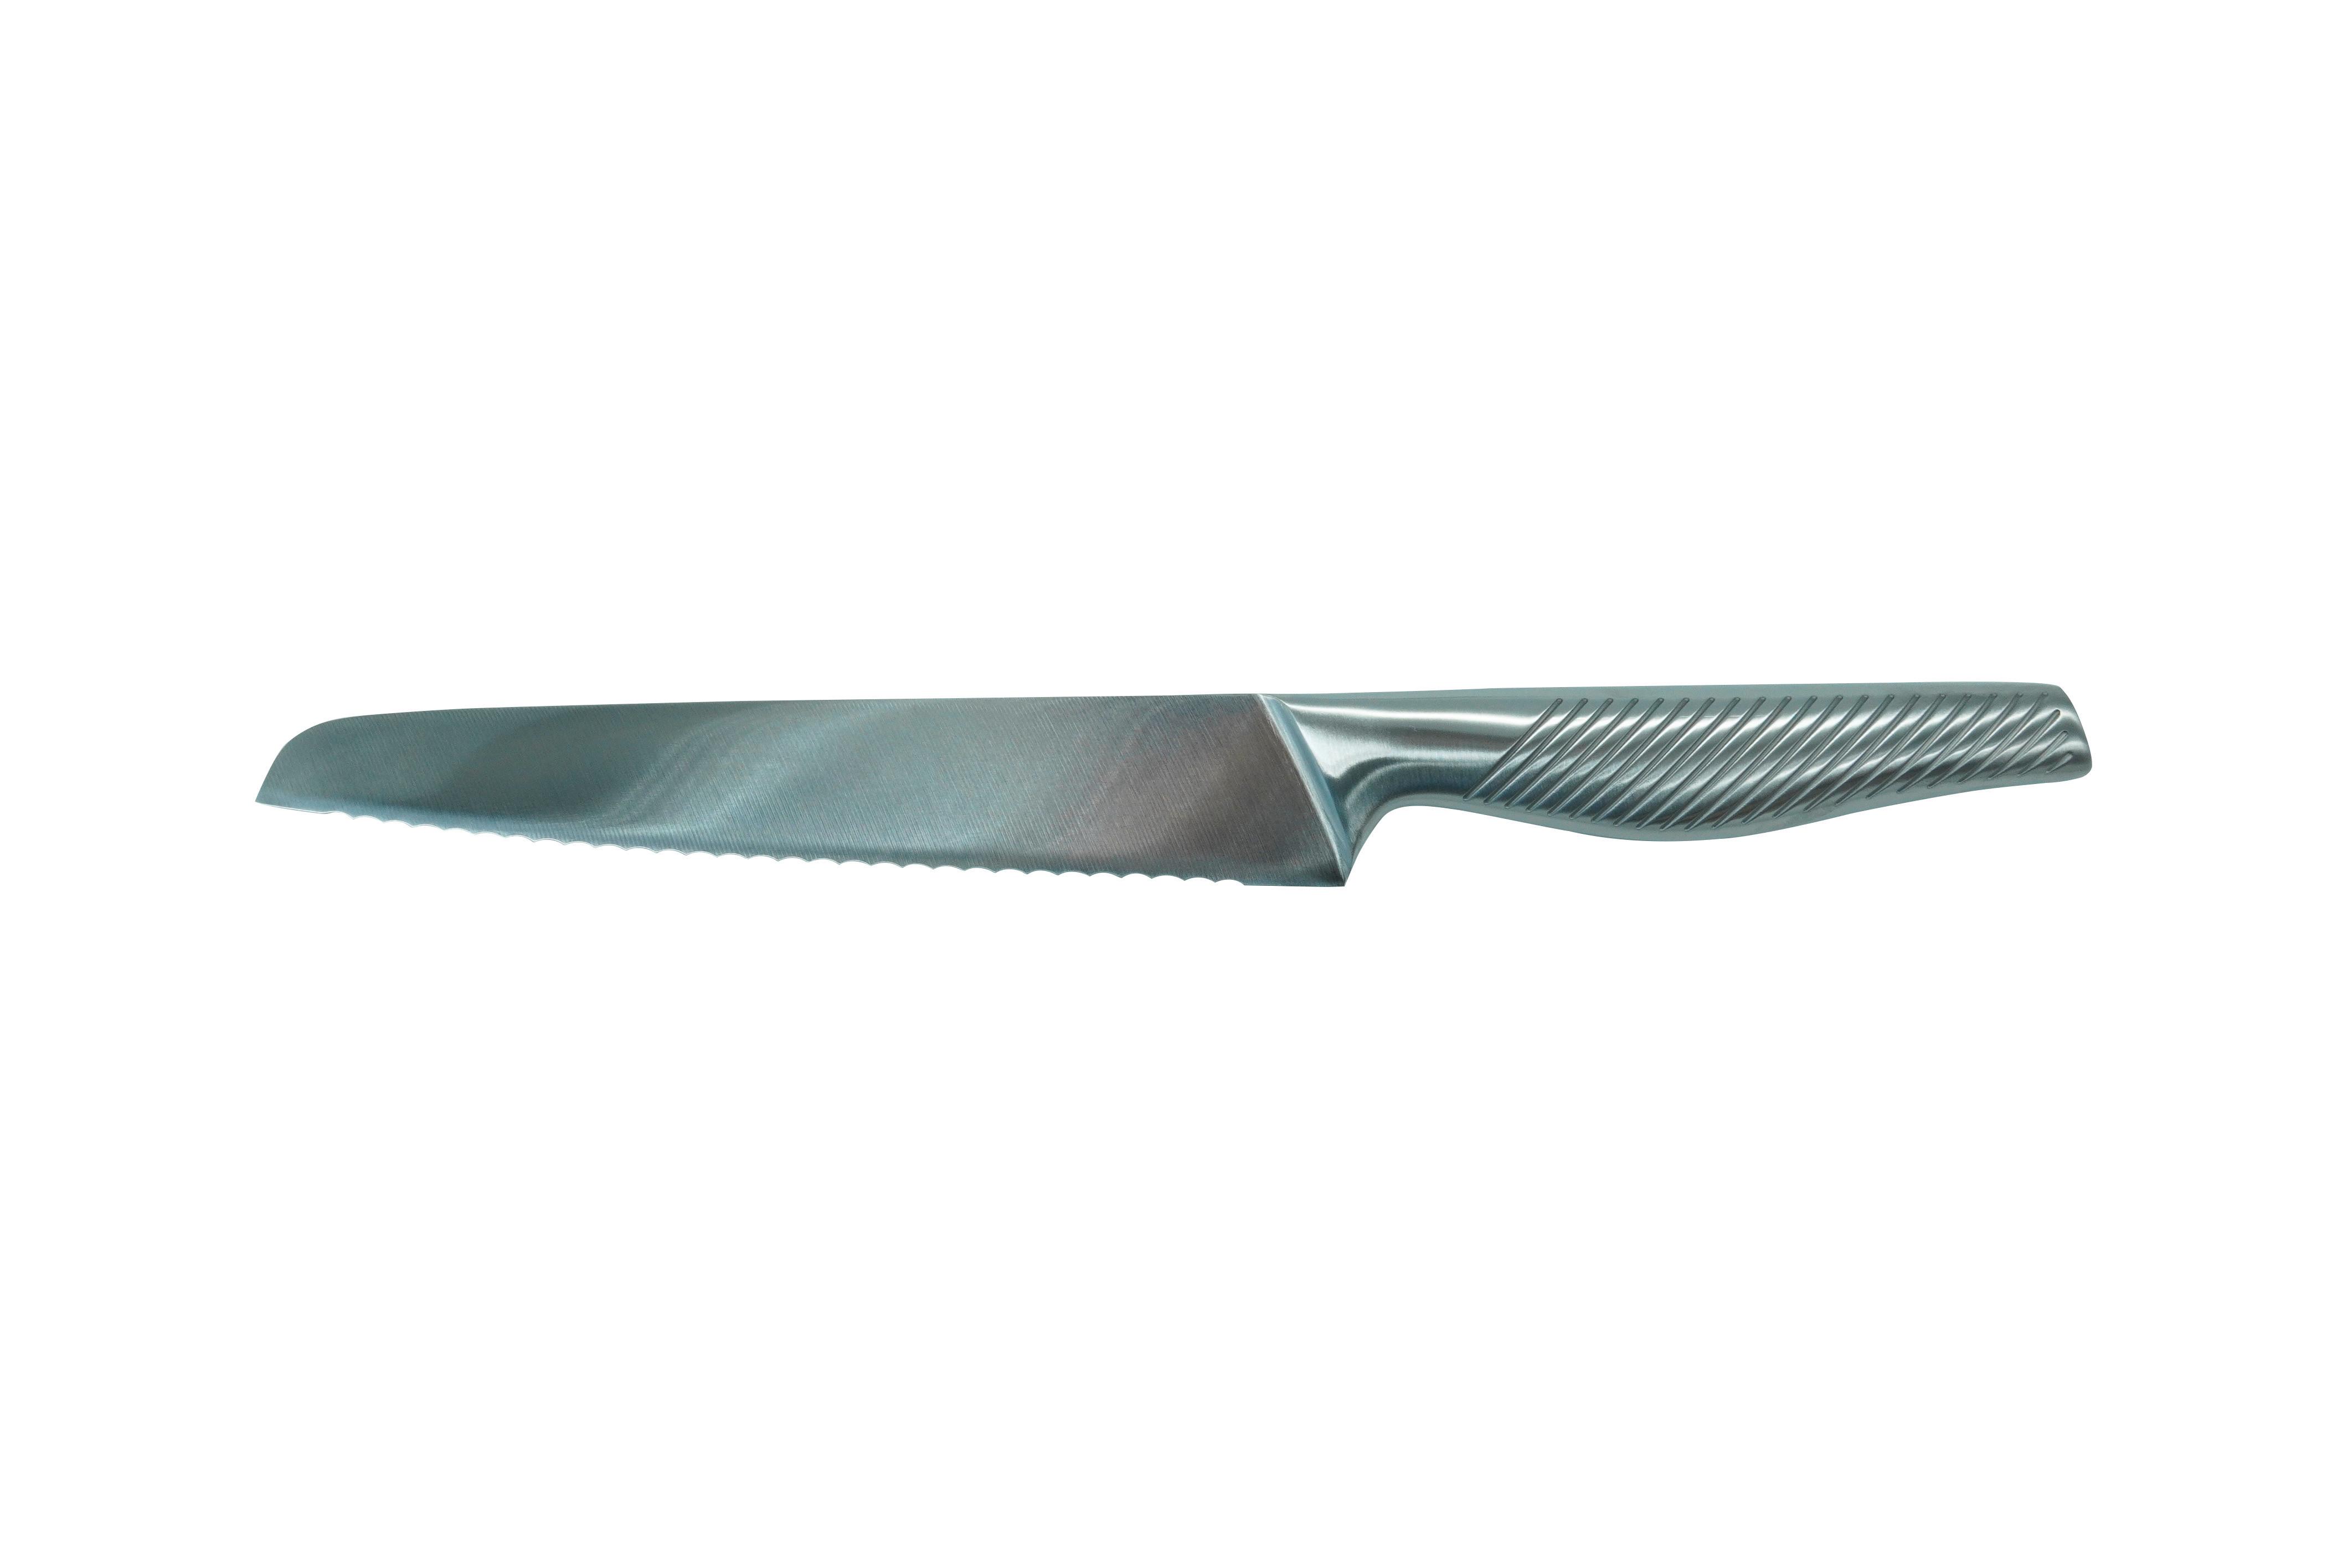 Brotmesser Flash aus Edelstahl ca. 35cm - Edelstahlfarben, MODERN, Metall (35cm) - Premium Living